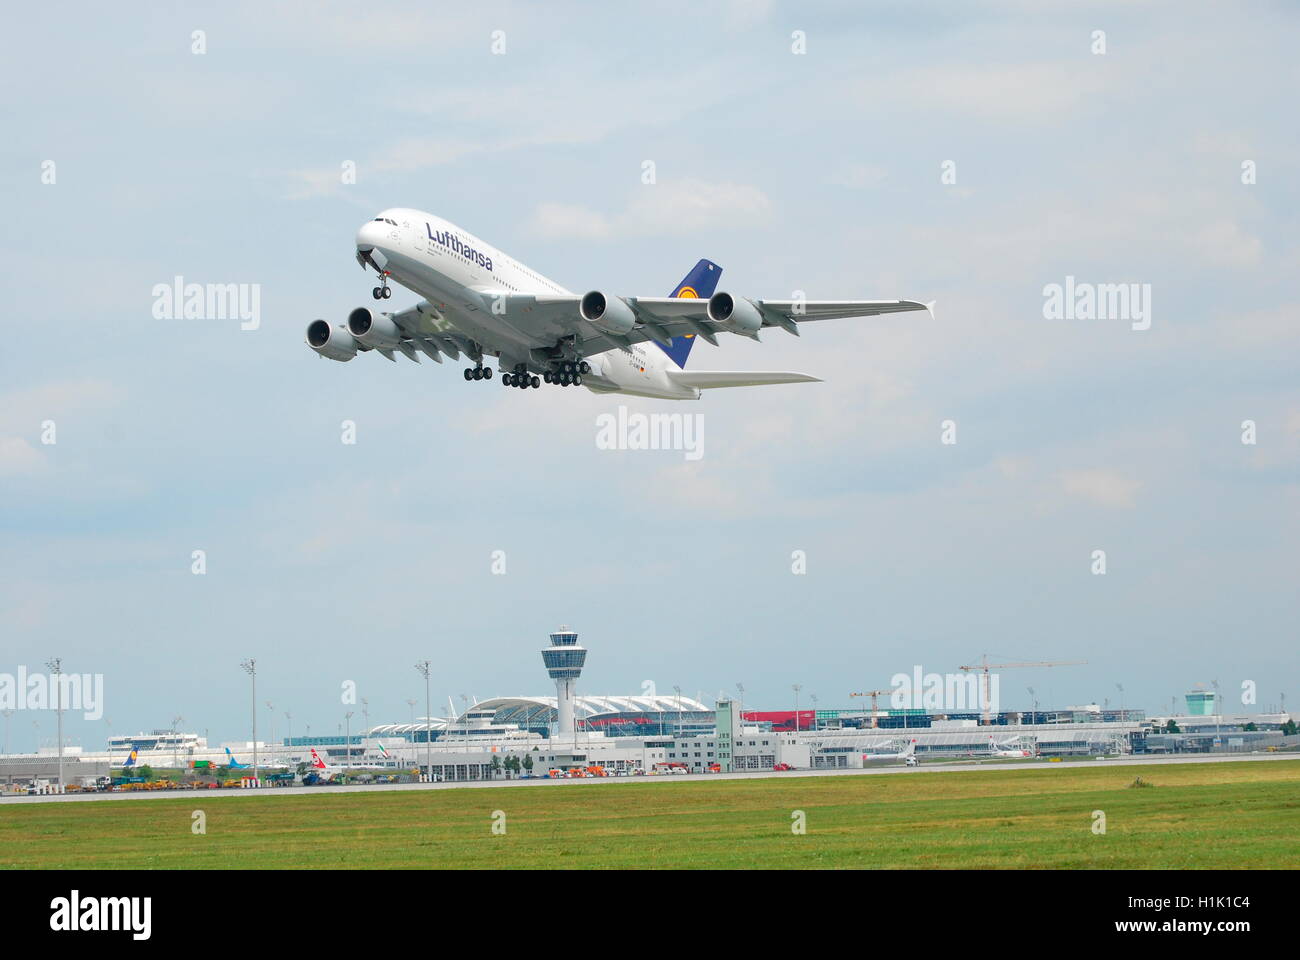 Zivilluftfahrt, Passagierflugzeug, Lufthansa, Airbus A380, Start, Startbahn, Flughafen, Airport, Muenchen Stock Photo